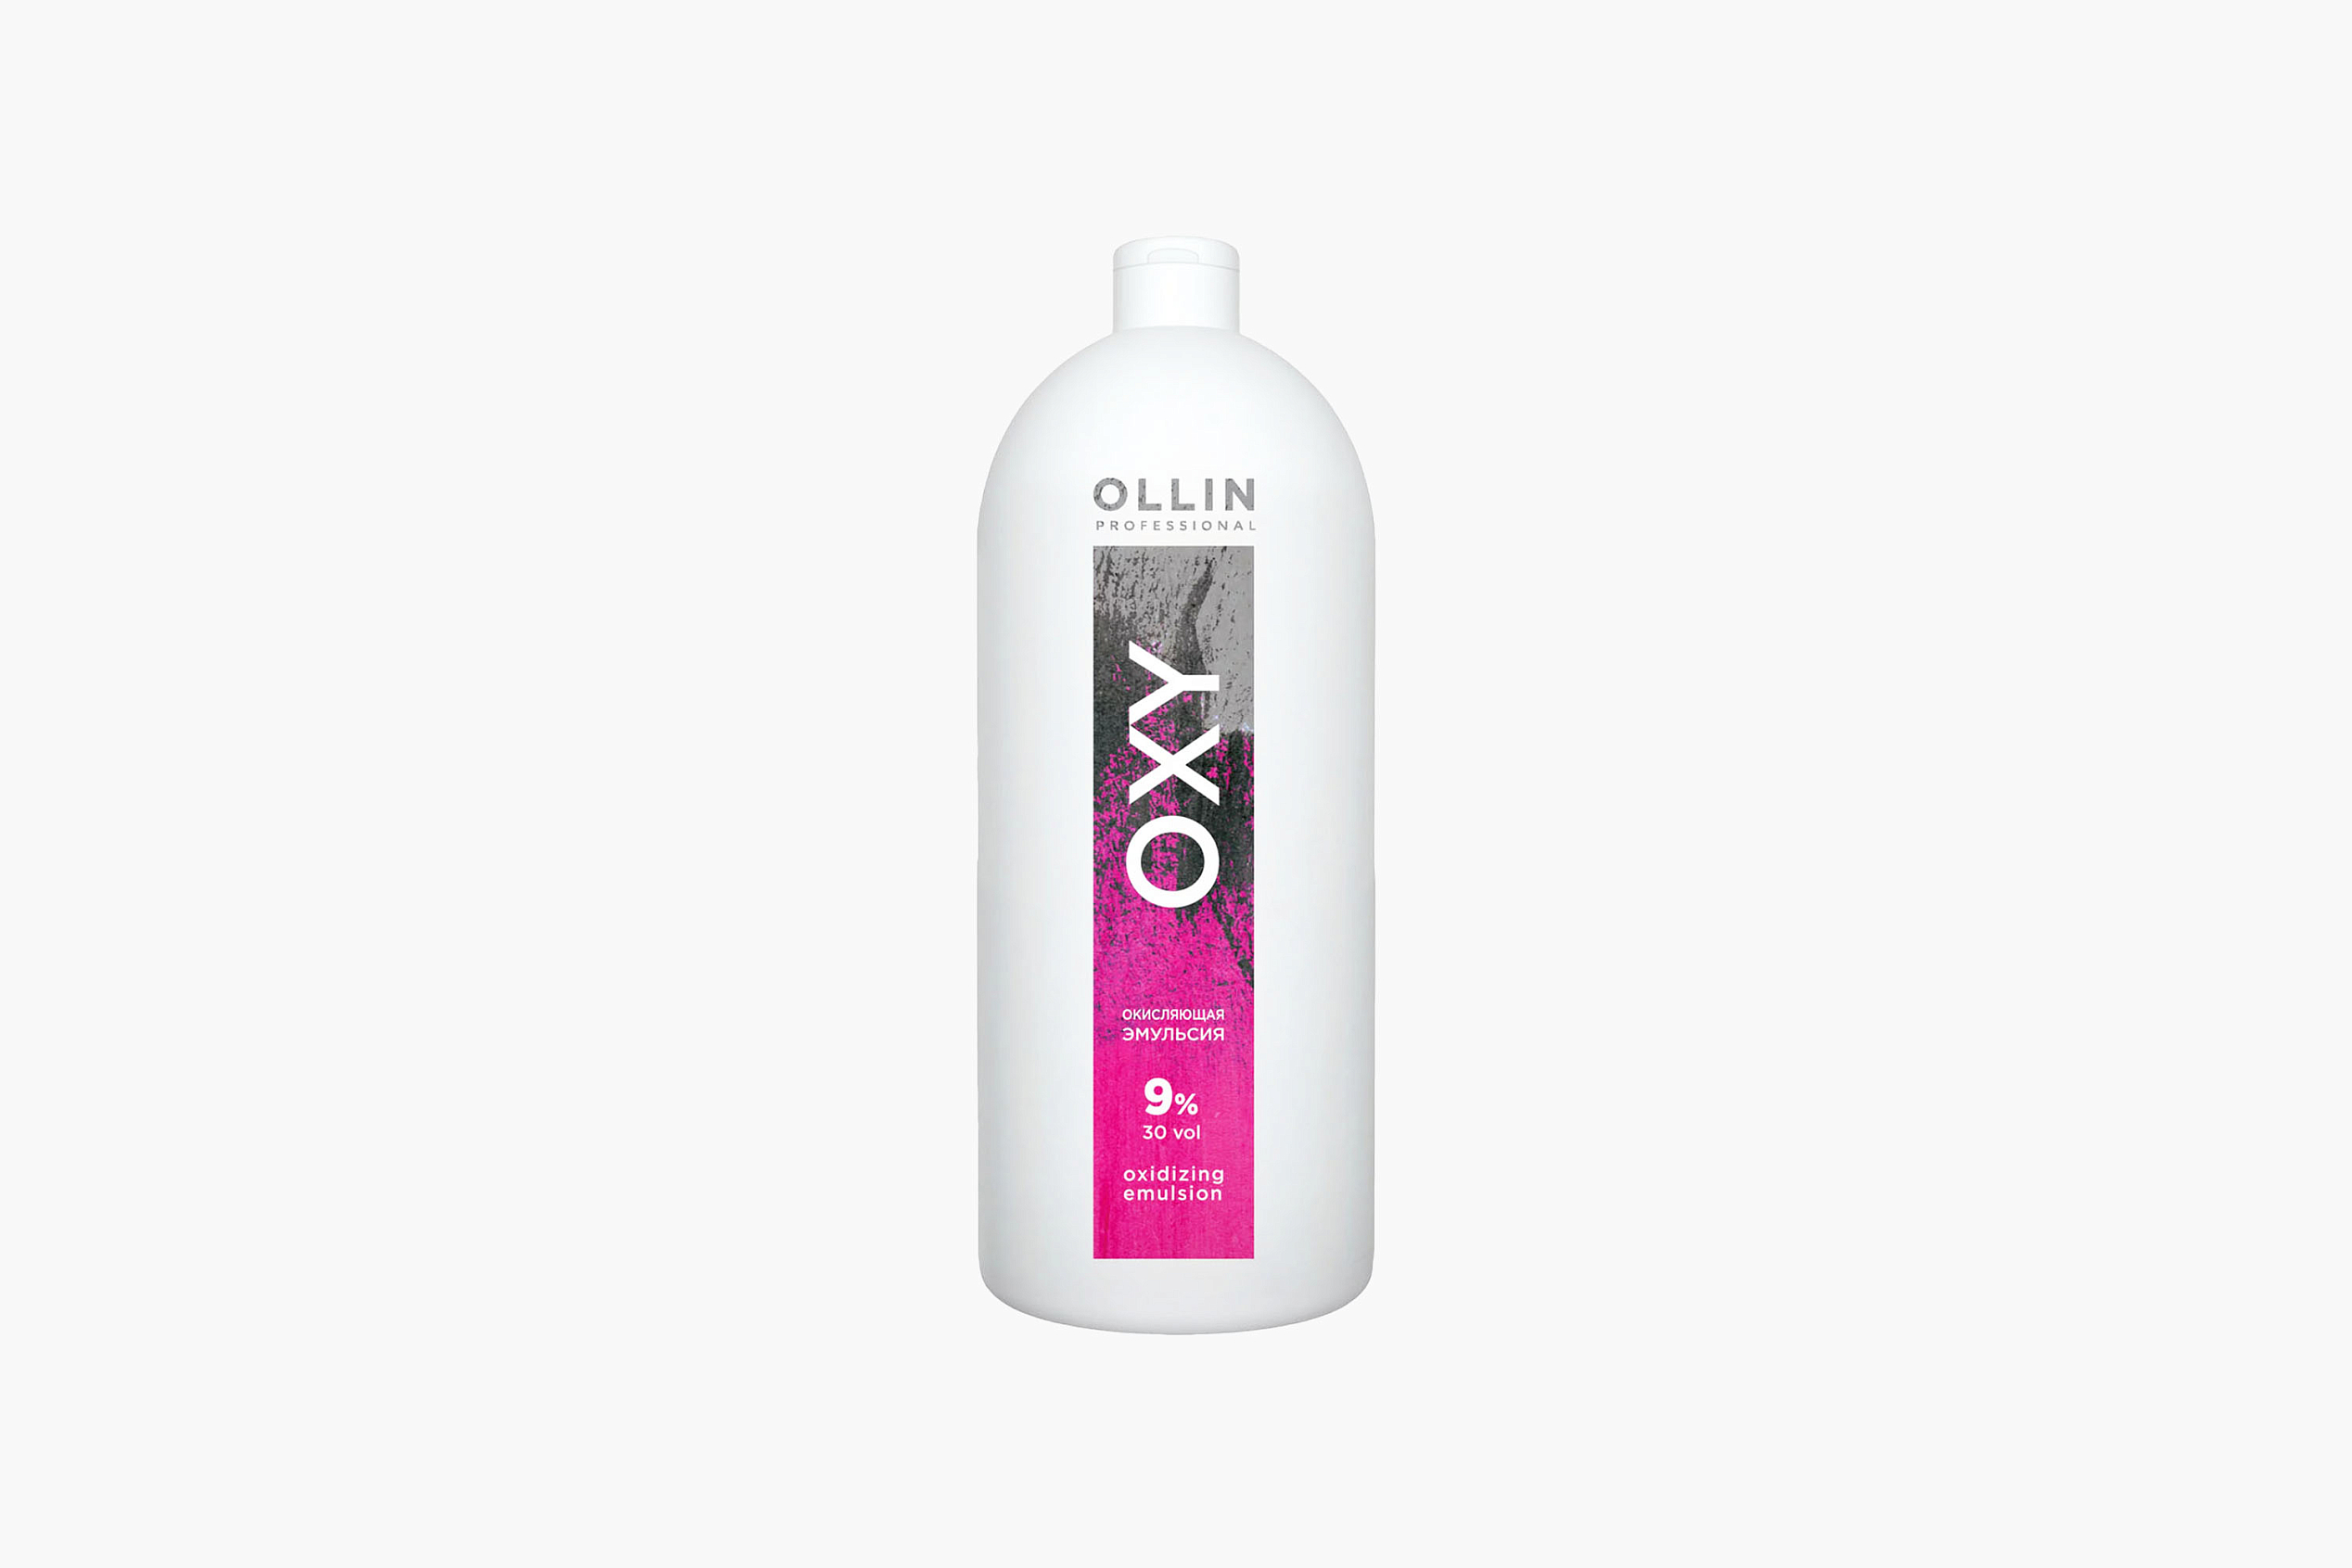 Ollin Professional Oxy 9% 30vol фото 1